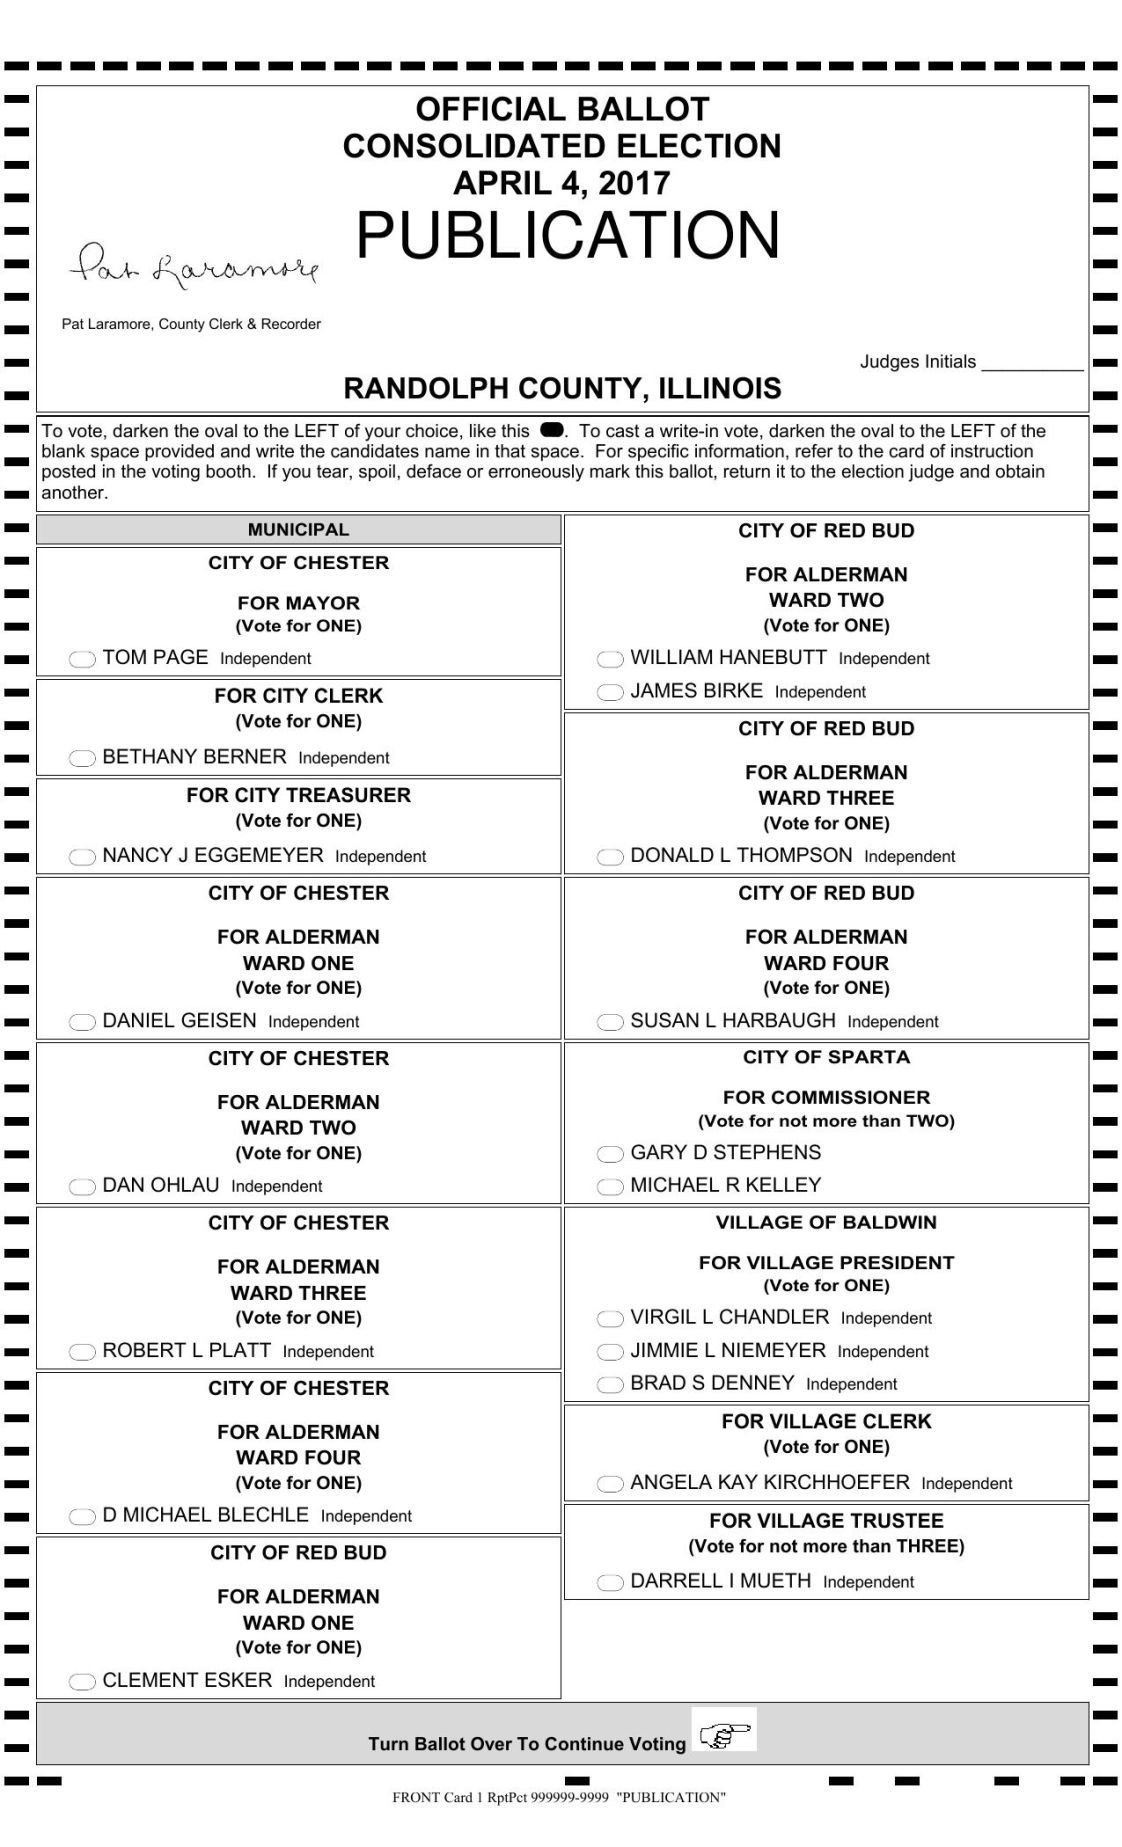 jackson sample ballot county missouri printable County  Randolph  Ballot Sample thesouthern.com